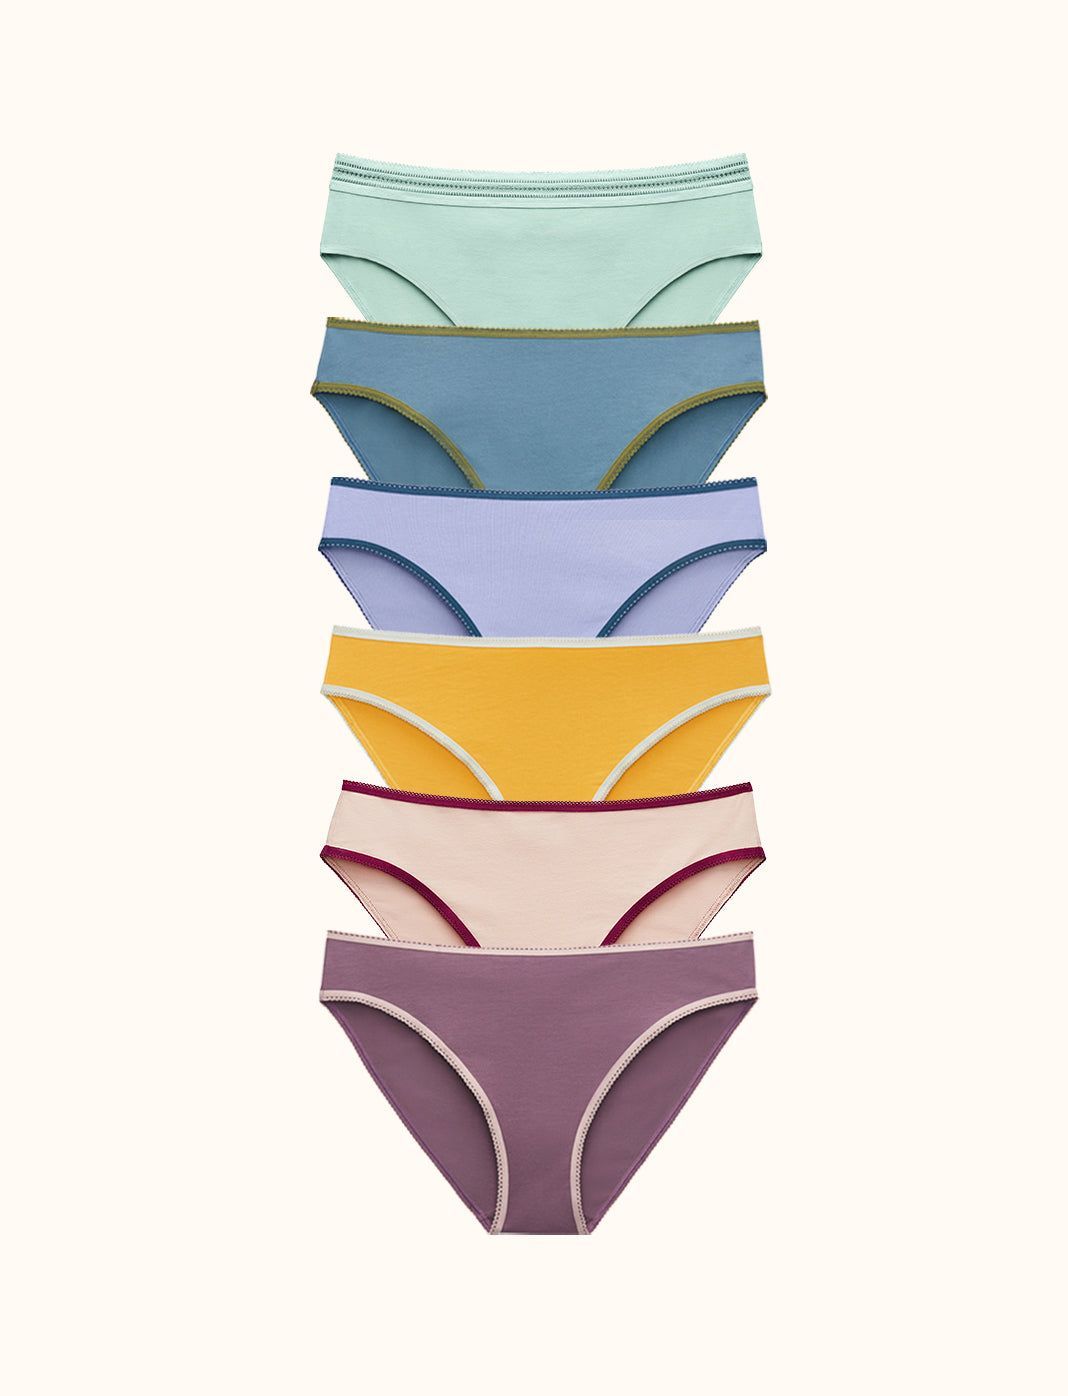 ZLYC Women Comfort Cotton Underwear Hipster Briefs Soft Hi-Cut Bikini Panties 